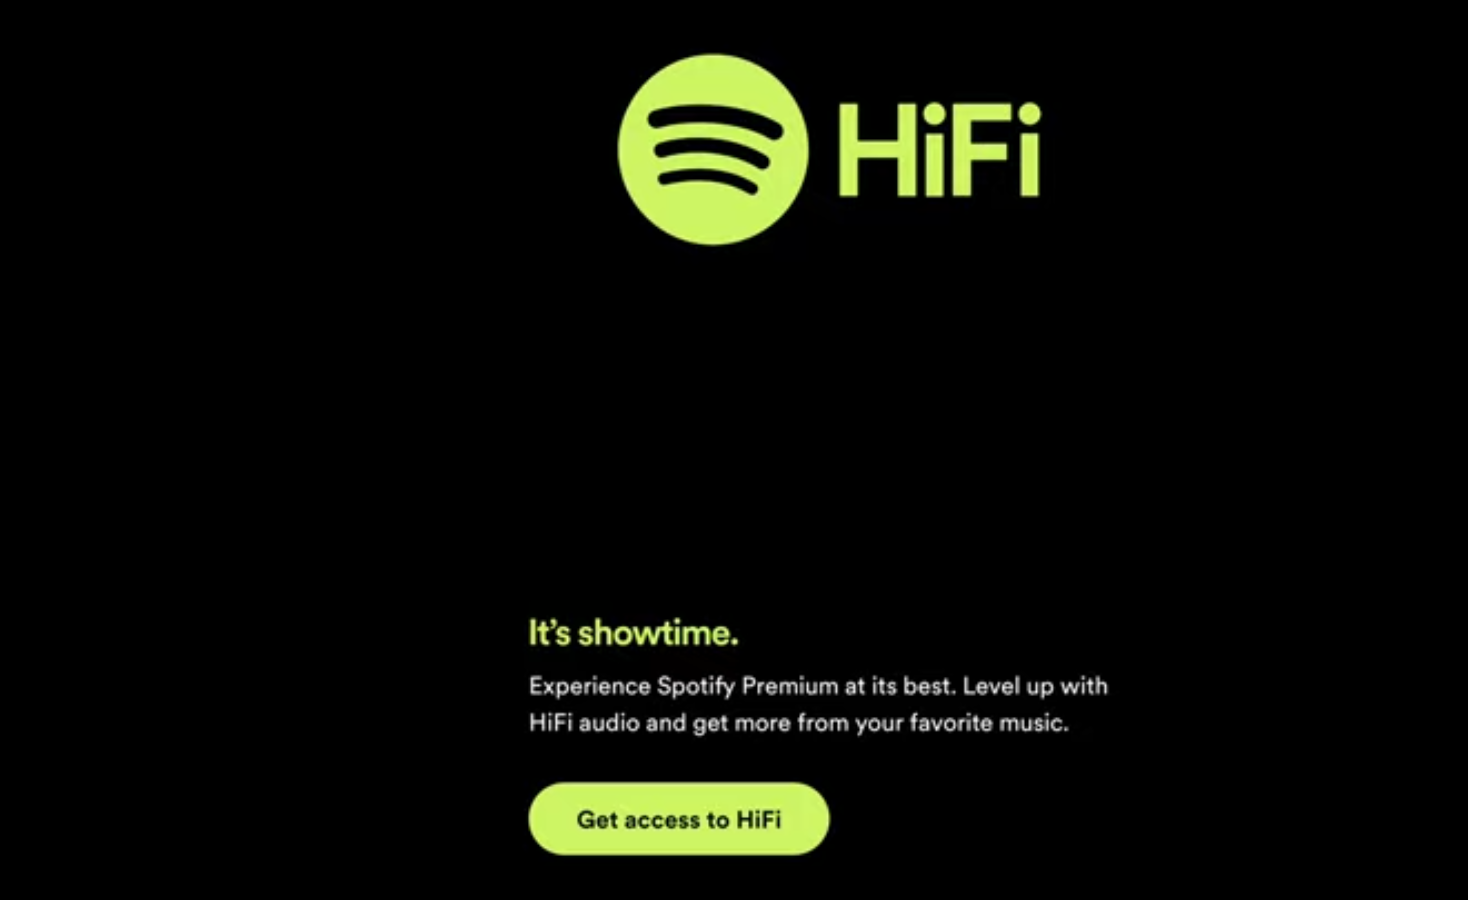 Seems like Spotify's HiFi tier isn't coming anytime soon